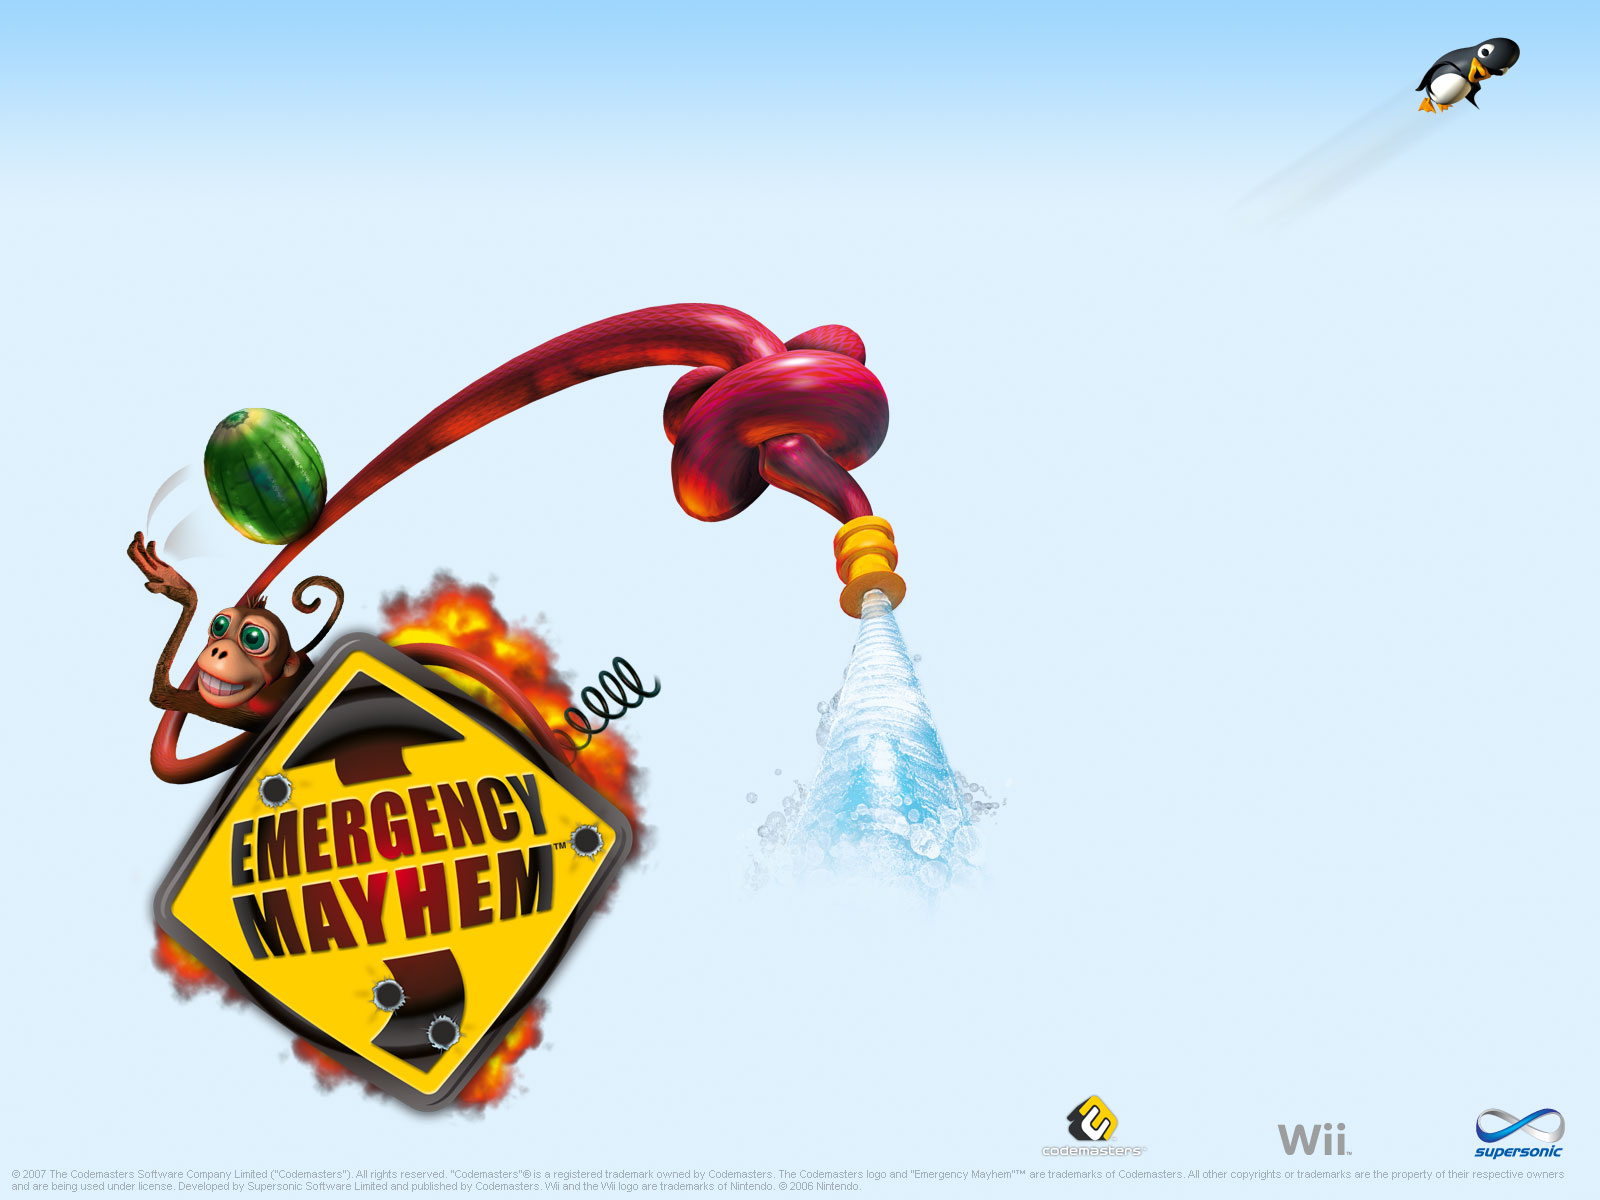 Fire Department Emergency Mayhem Wallpaper Gallery Best Game